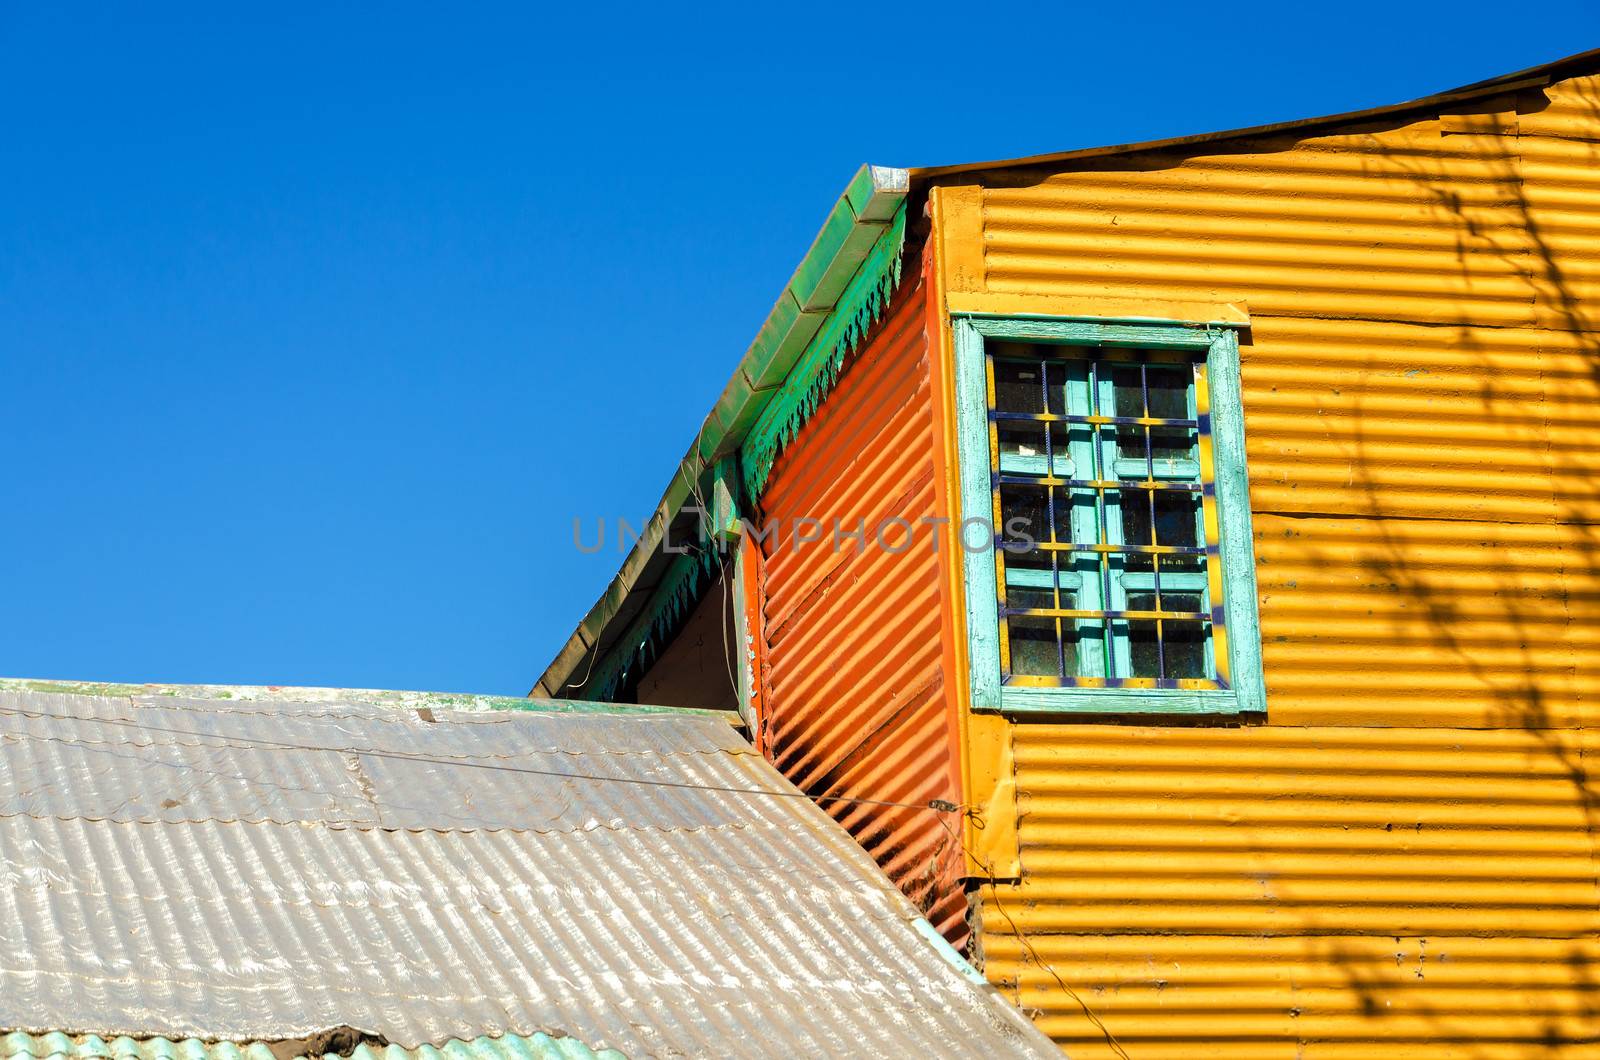 Old orange building set against a blue sky in La Boca neighborhood of Buenos Aires